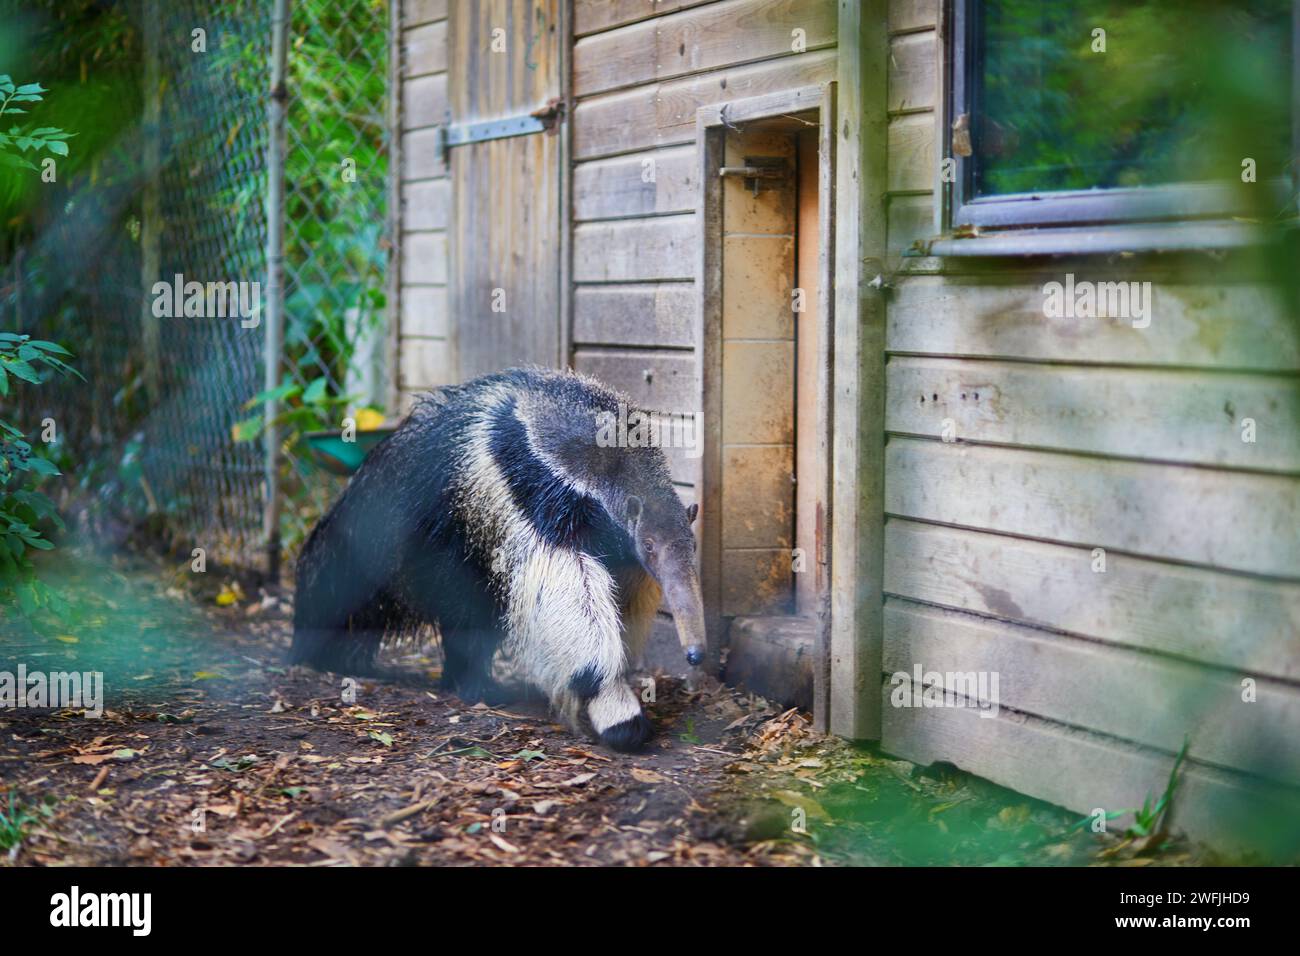 Giant anteater (Myrmecophaga tridactyla) in a zoo or safari park Stock Photo